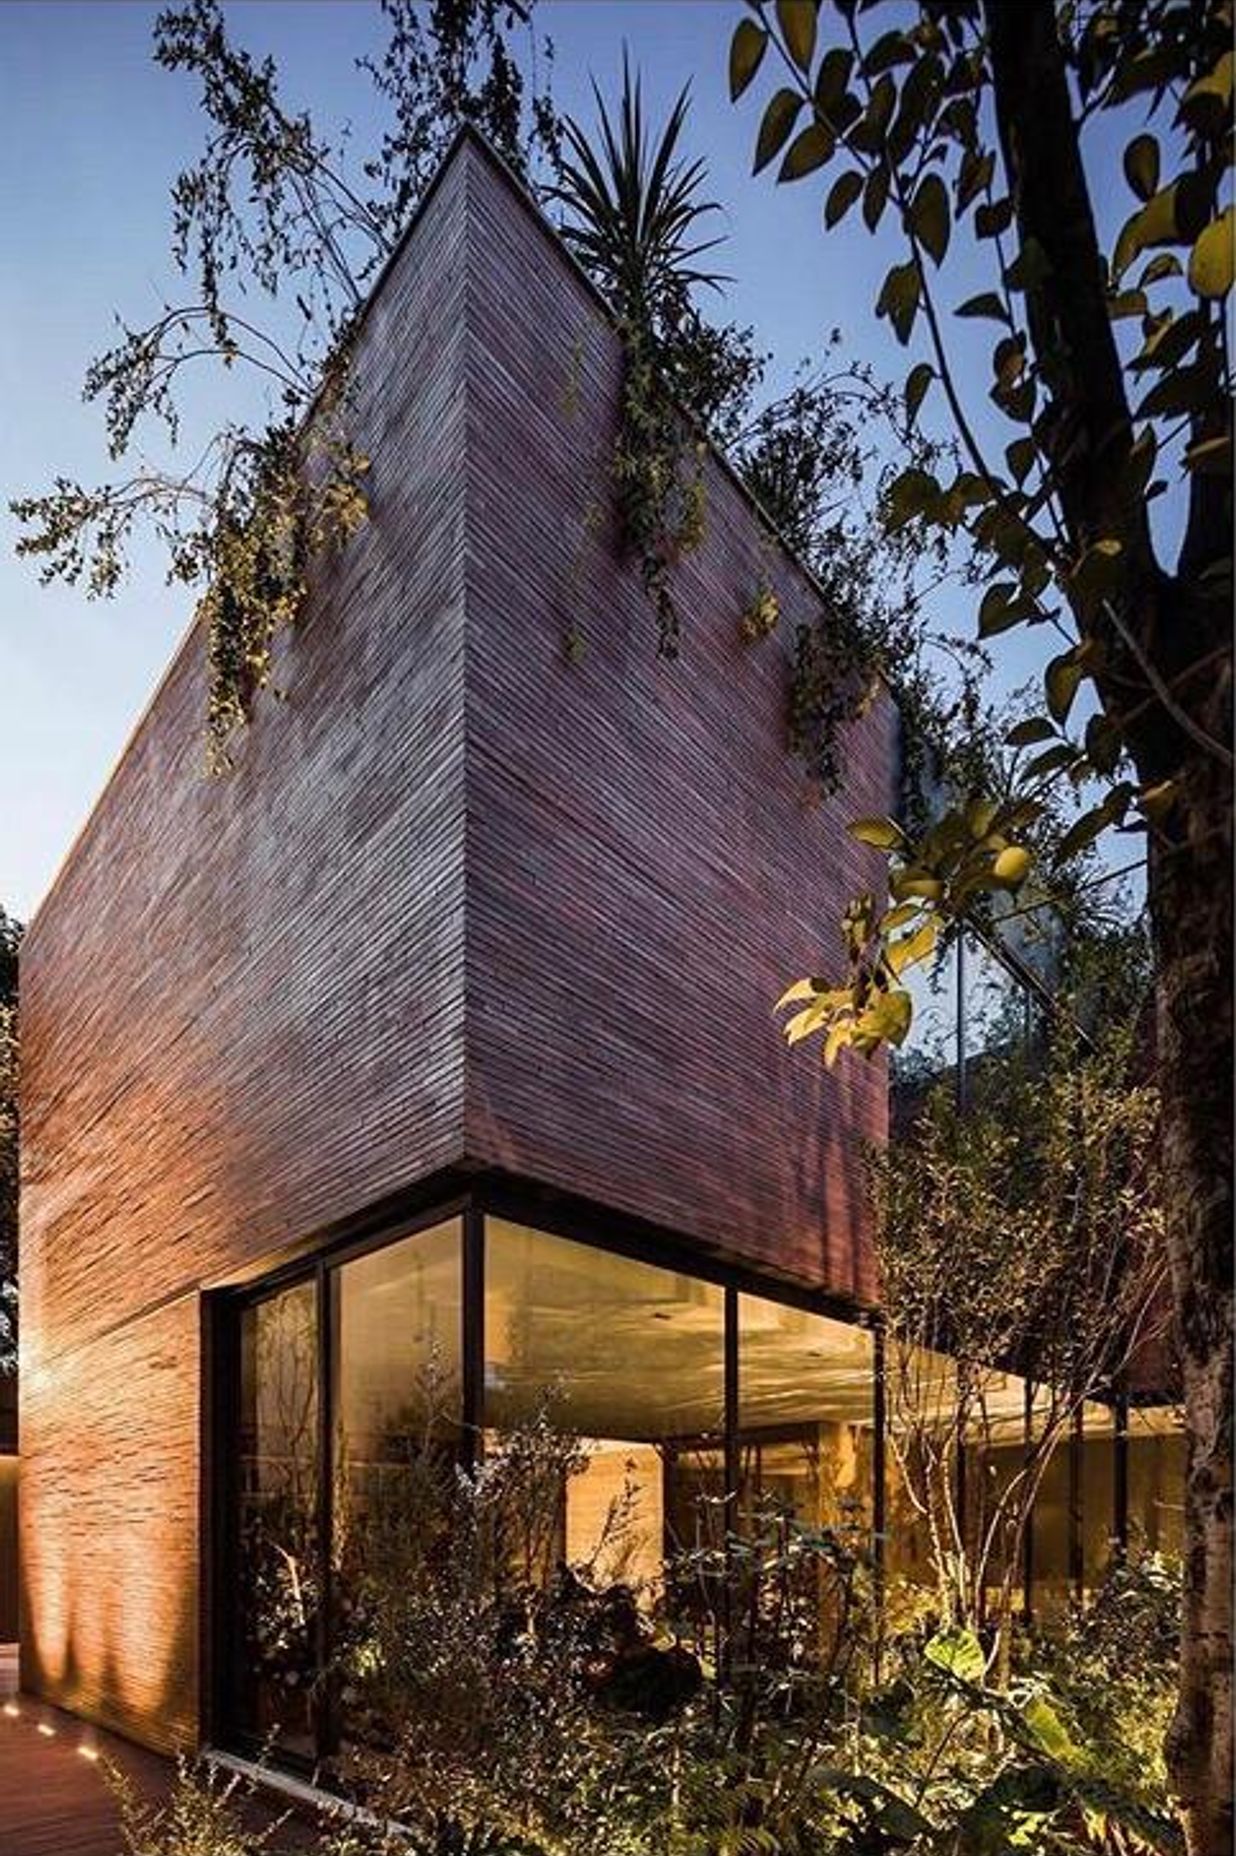 Long-format bricks create a stunningly modern facade on this contemporary home.